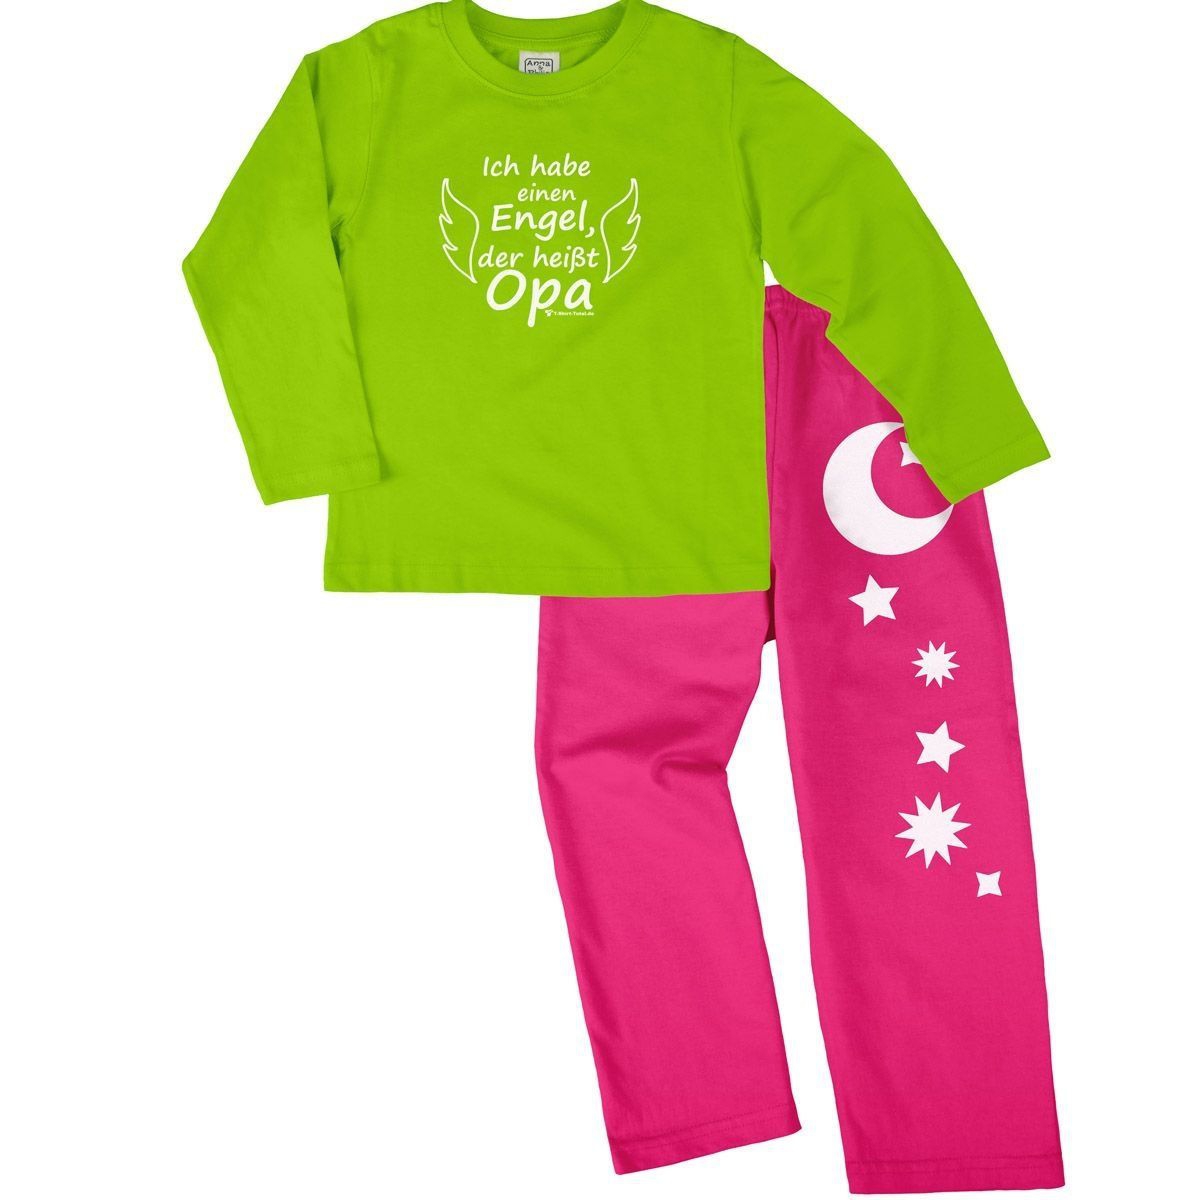 Engel Opa Pyjama Set hellgrün / pink 110 / 116